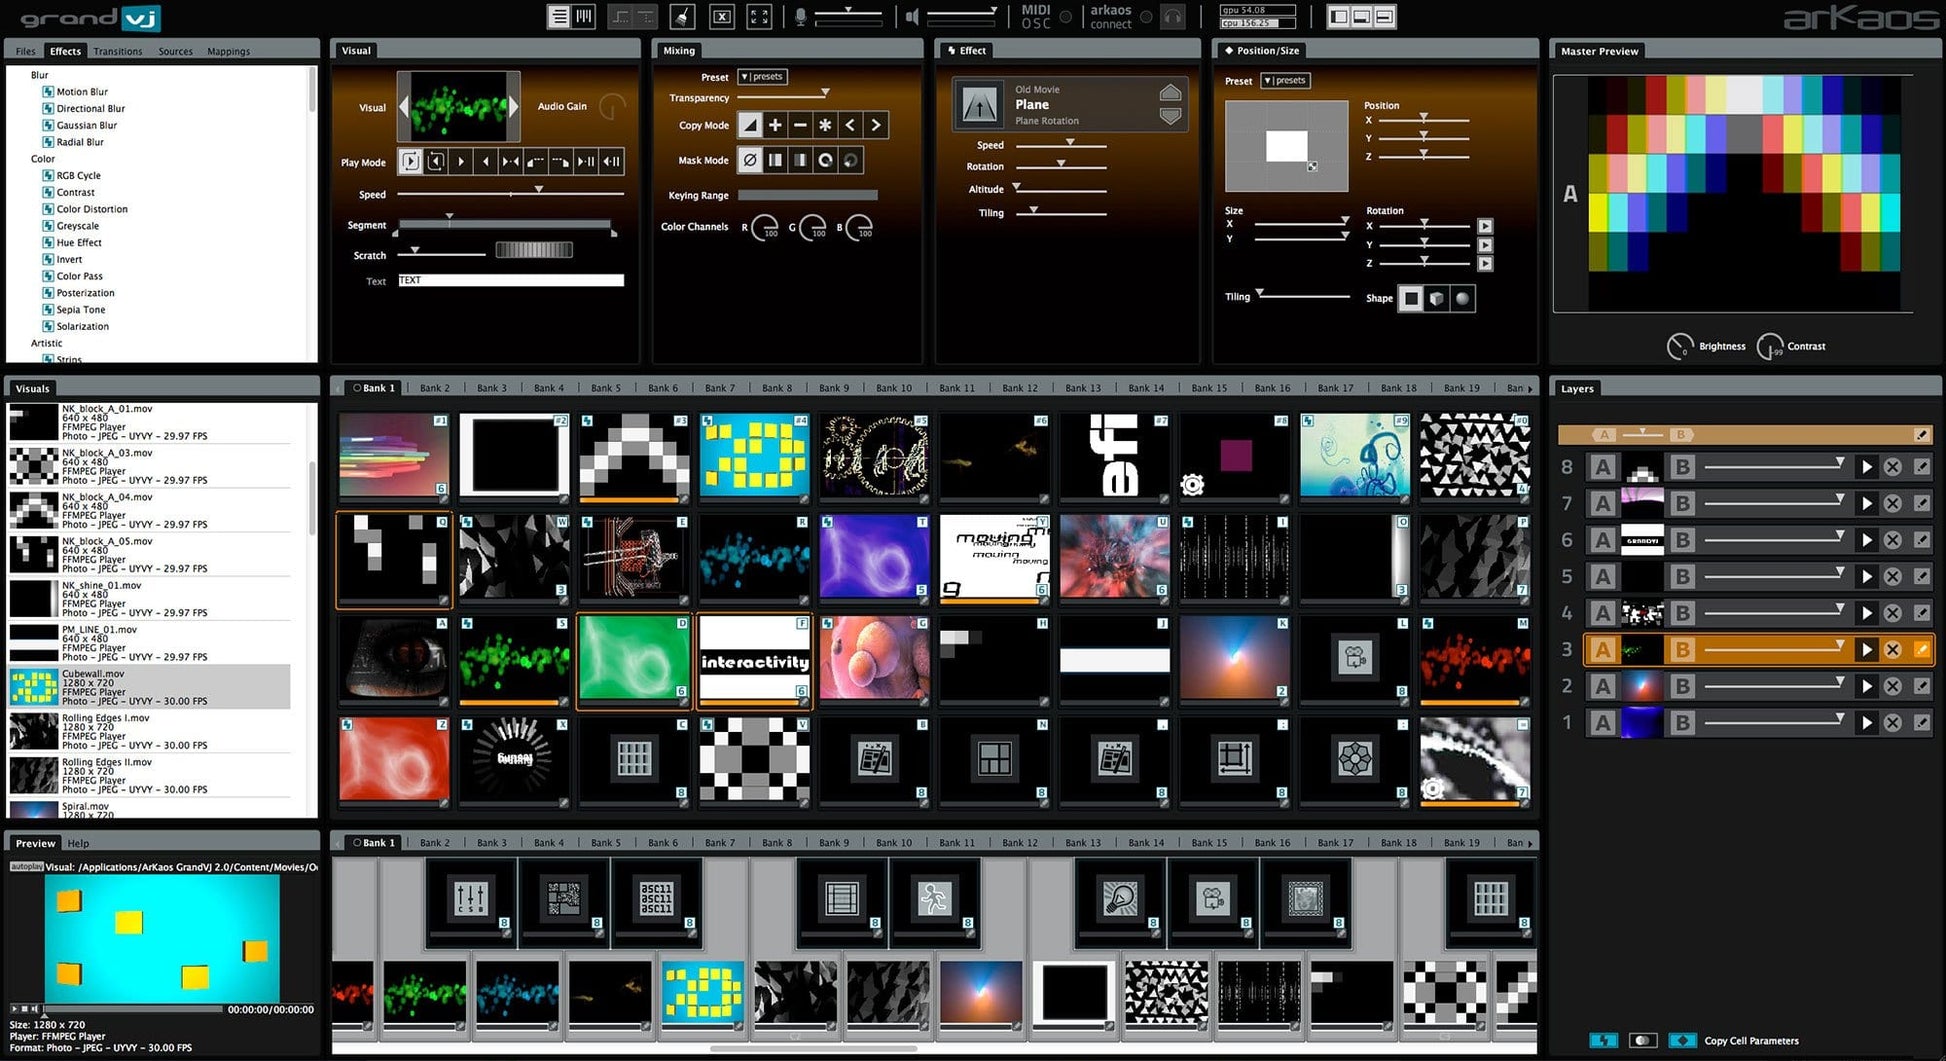 ADJ American DJ Arkaos Grand VJ 2.0 Video Mixing Software - ProSound and Stage Lighting